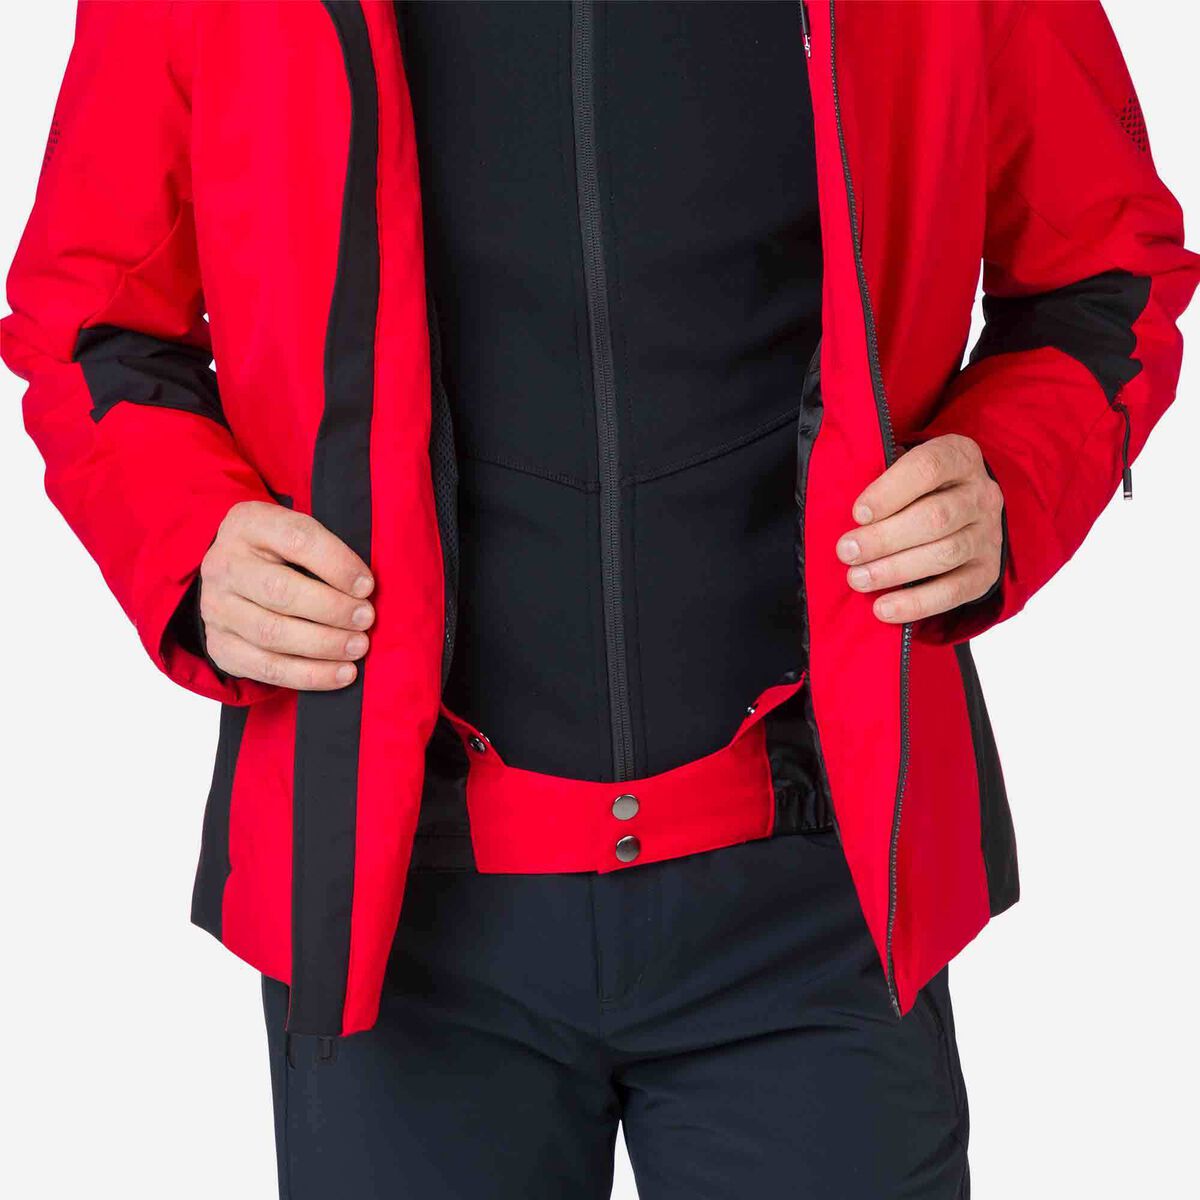 Ski Jackets - All Jackets - CLOTHING - Men